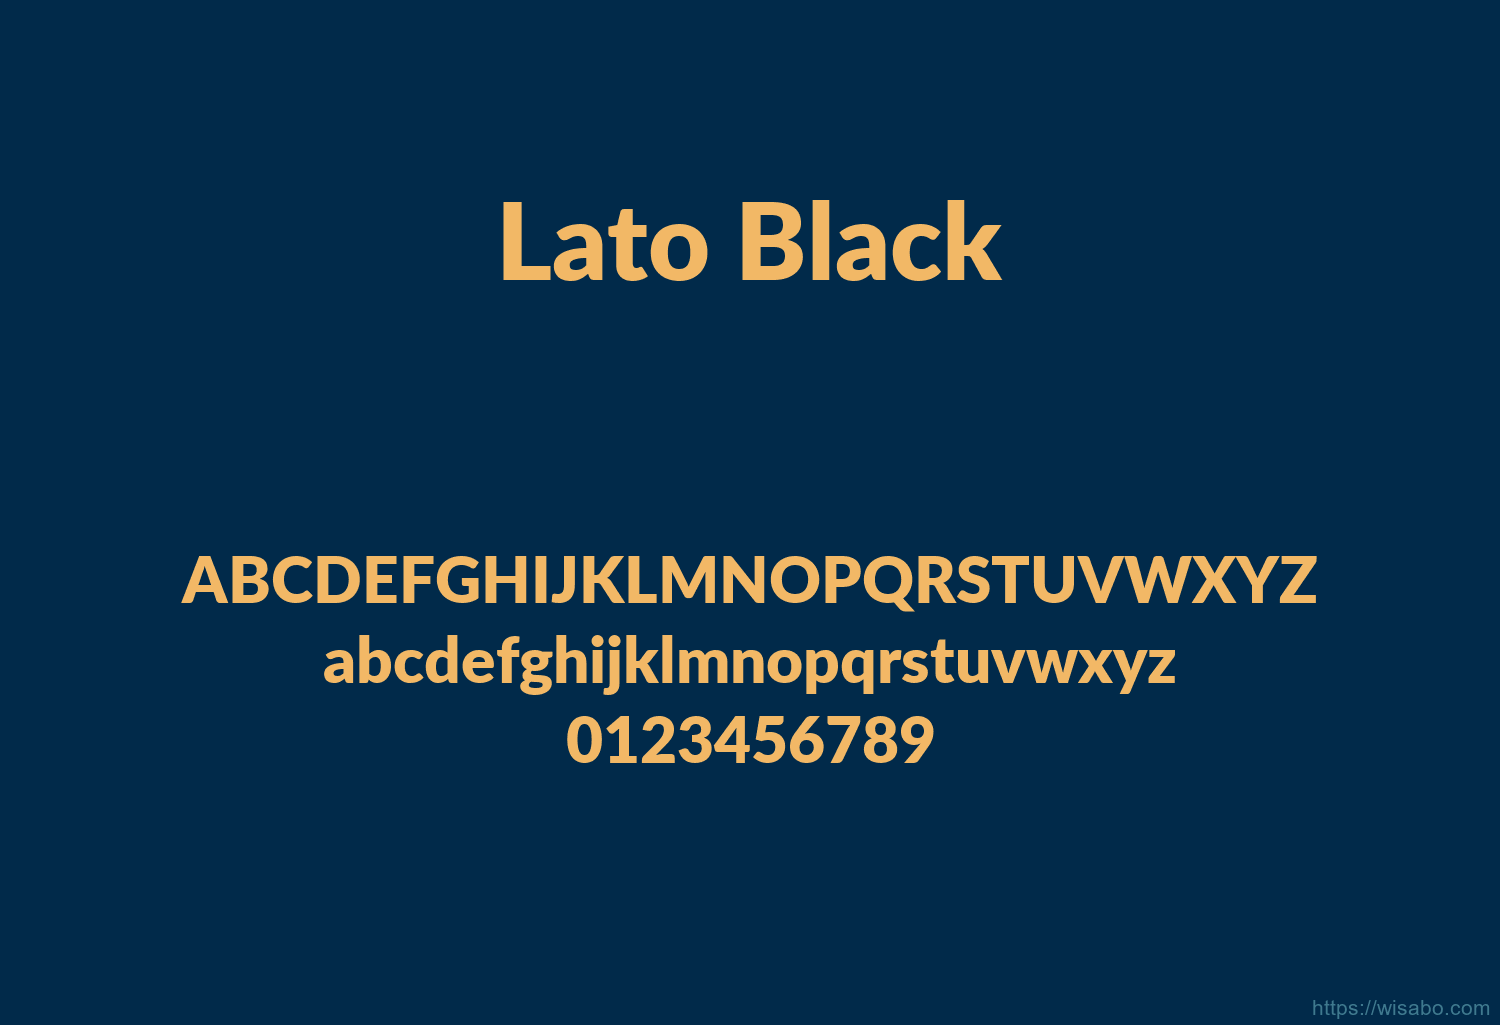 Lato Black